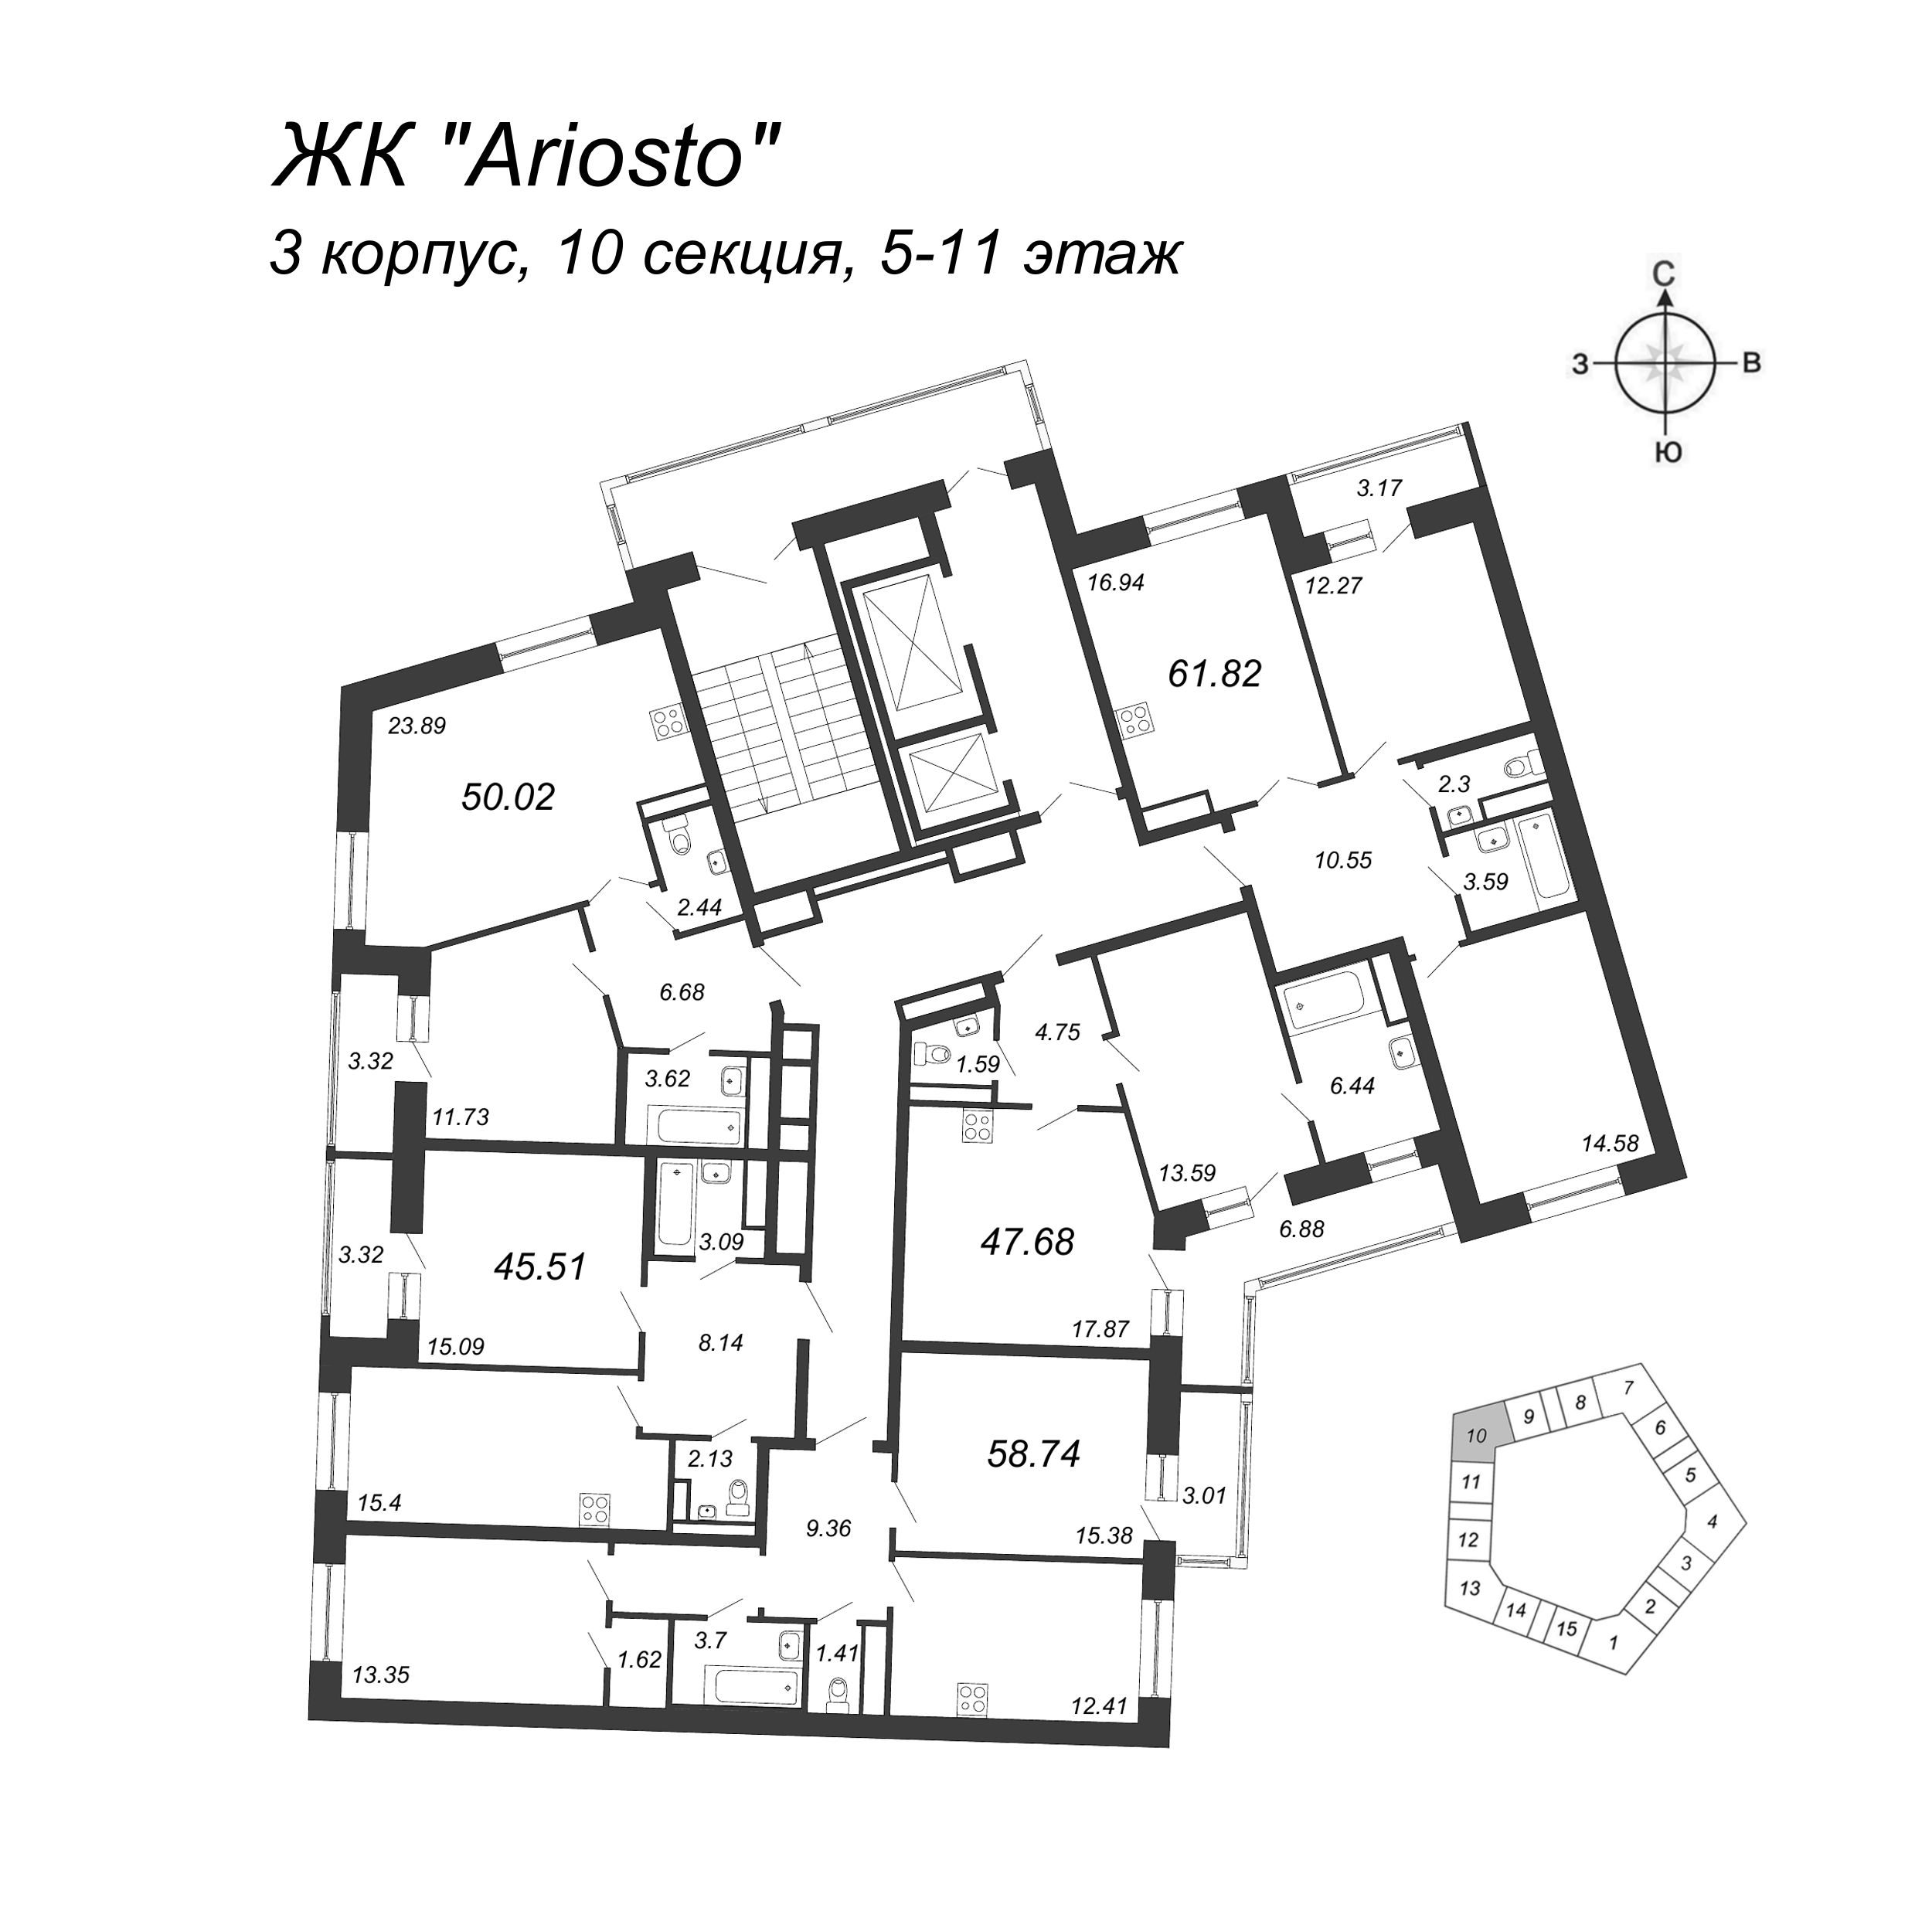 2-комнатная (Евро) квартира, 45.51 м² - планировка этажа